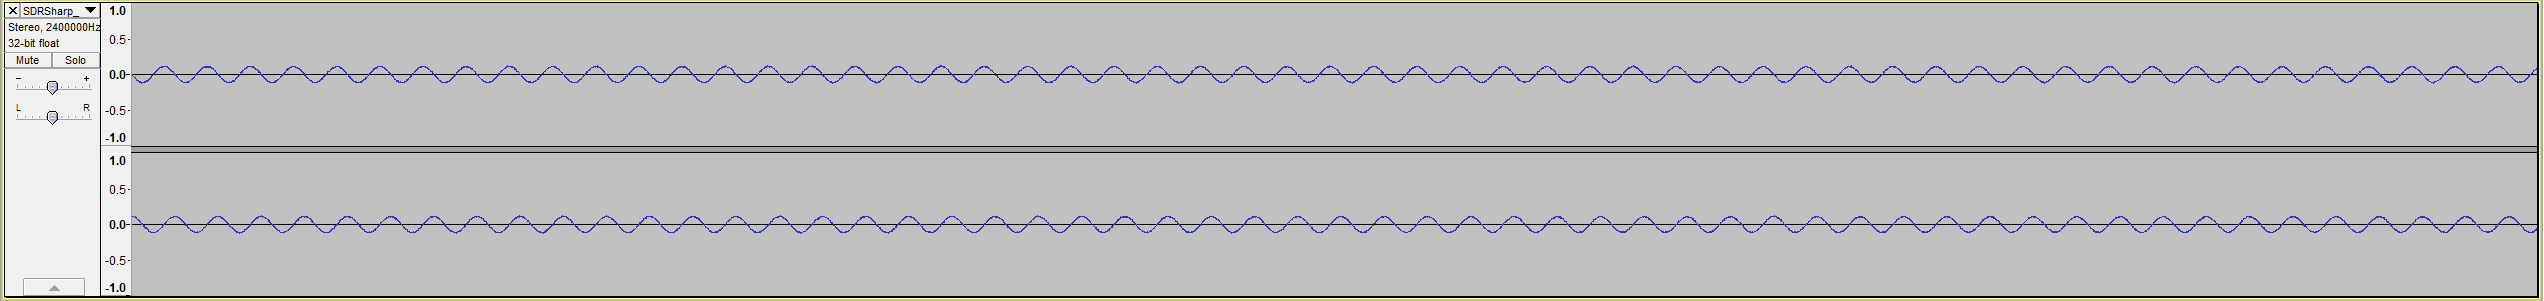 A nice sine wave!